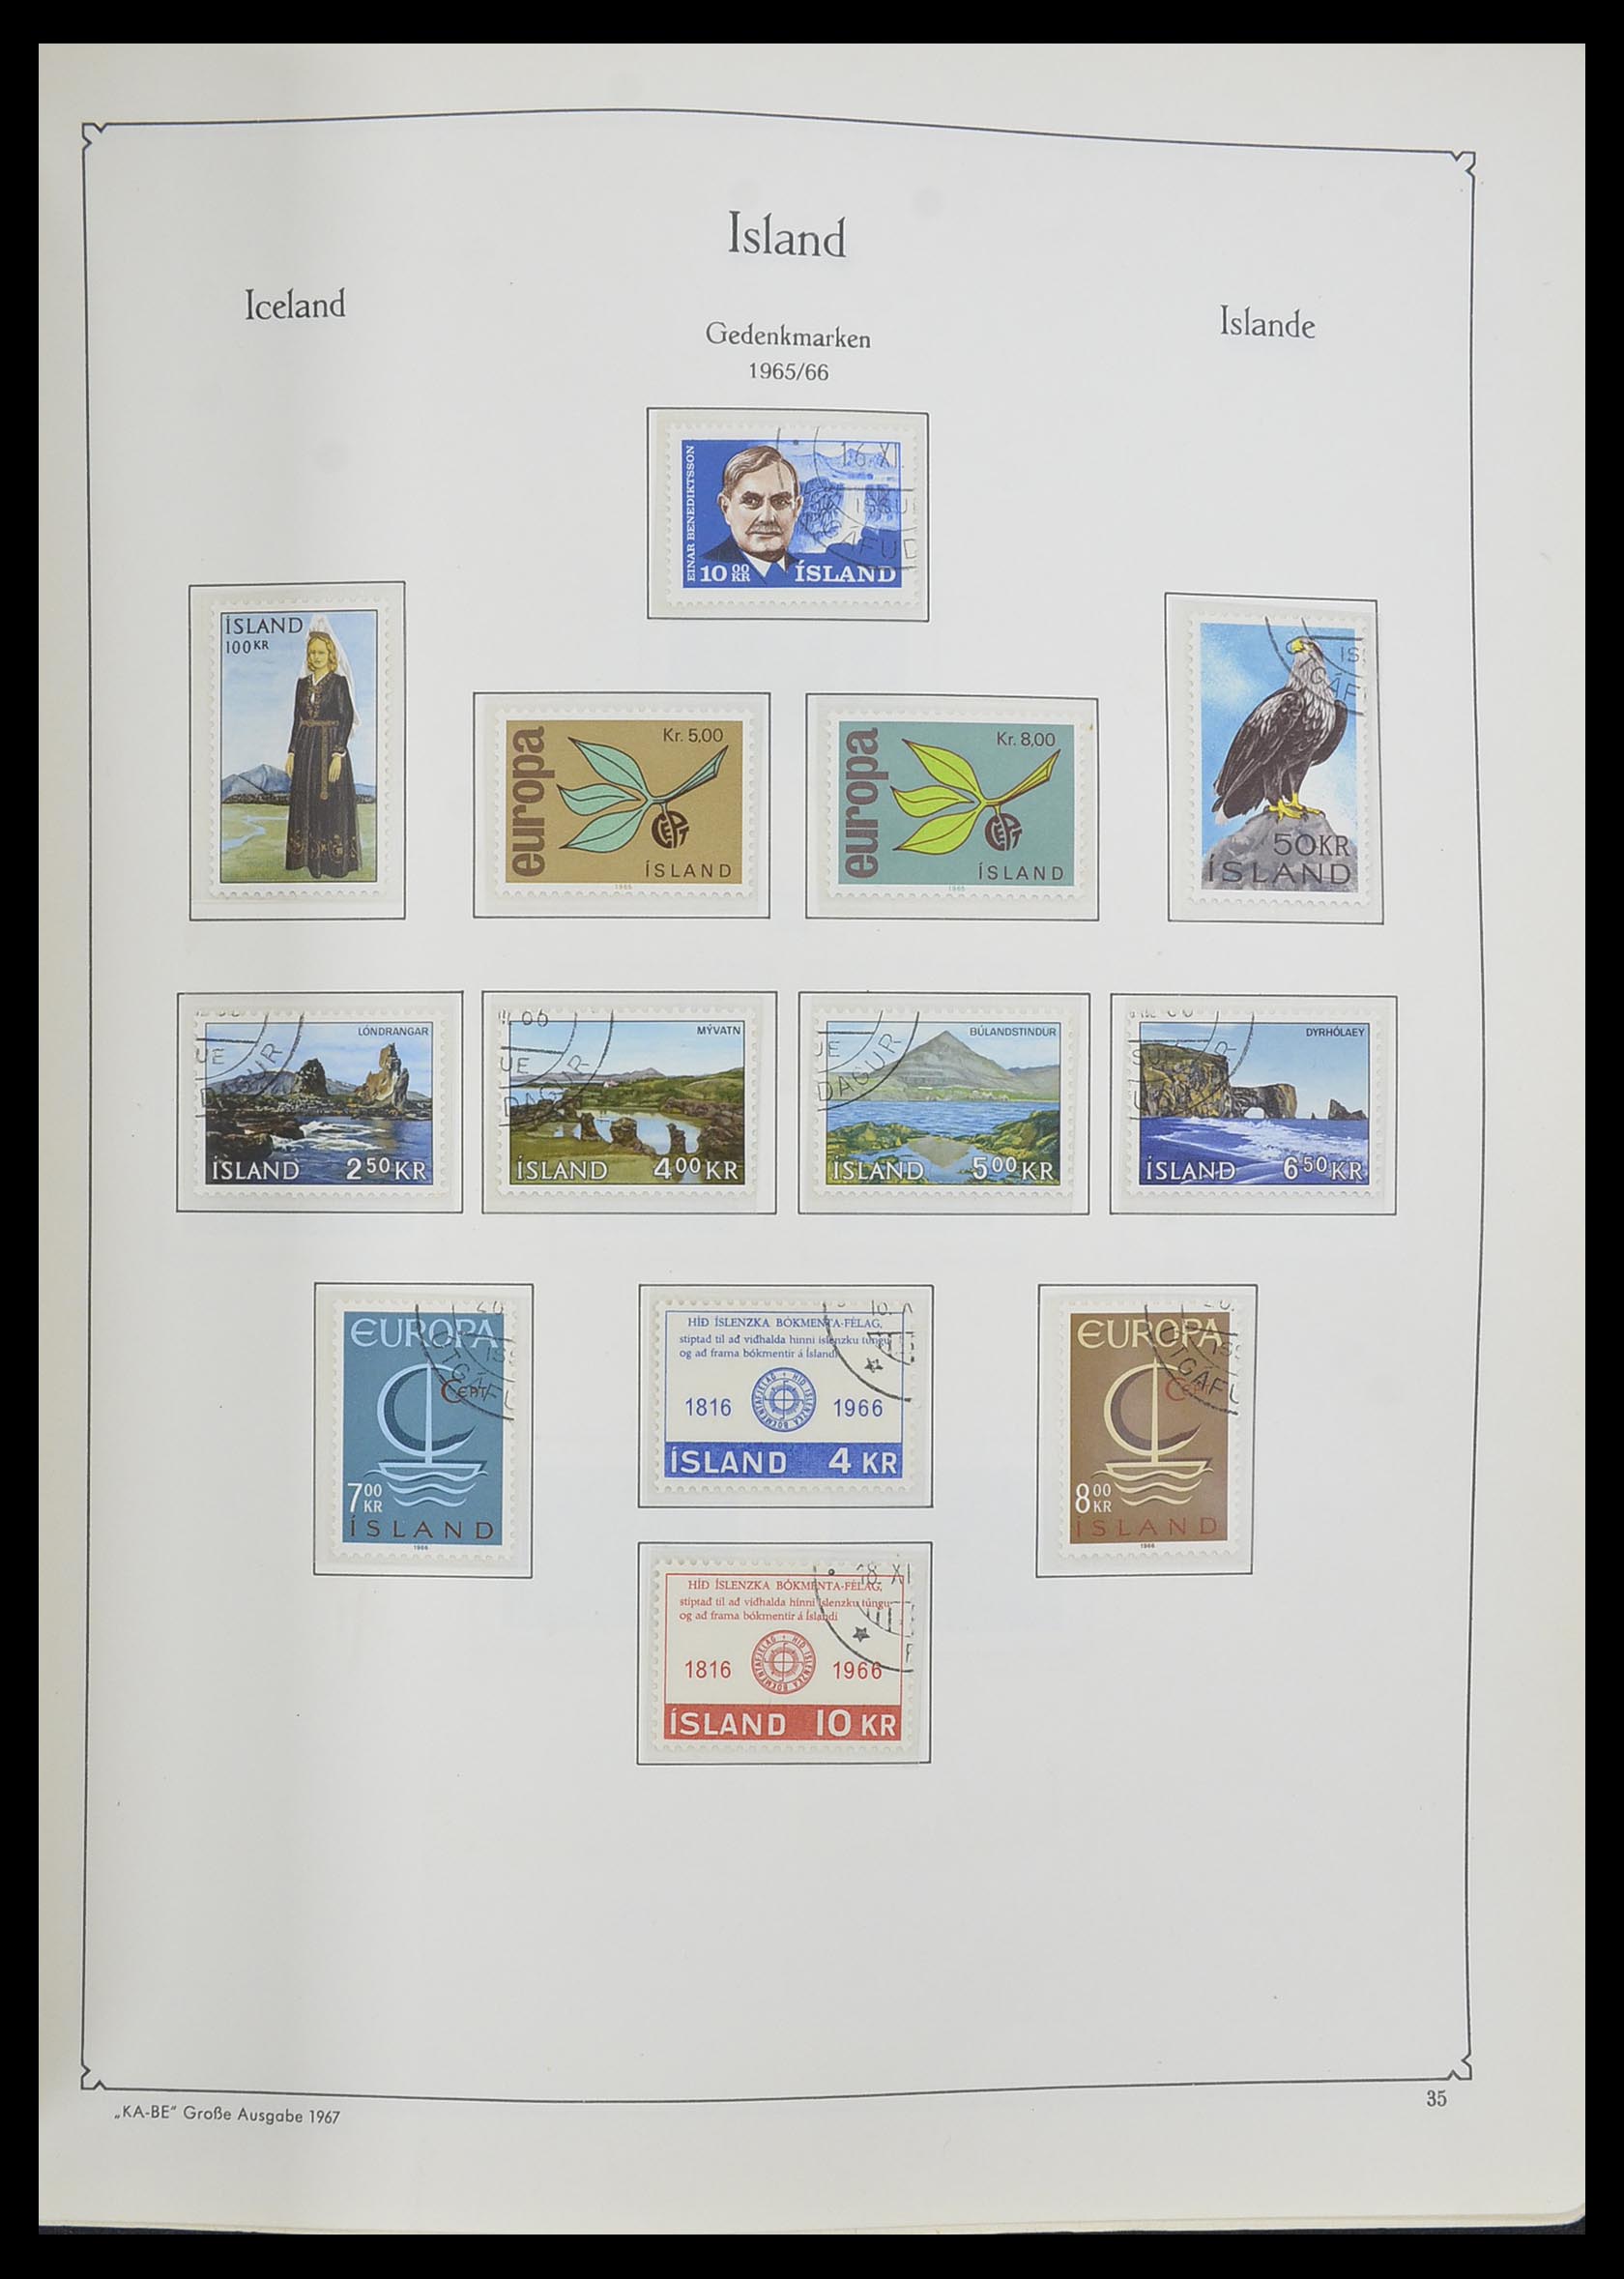 33379 091 - Stamp collection 33379 Scandinavia 1856-1972.